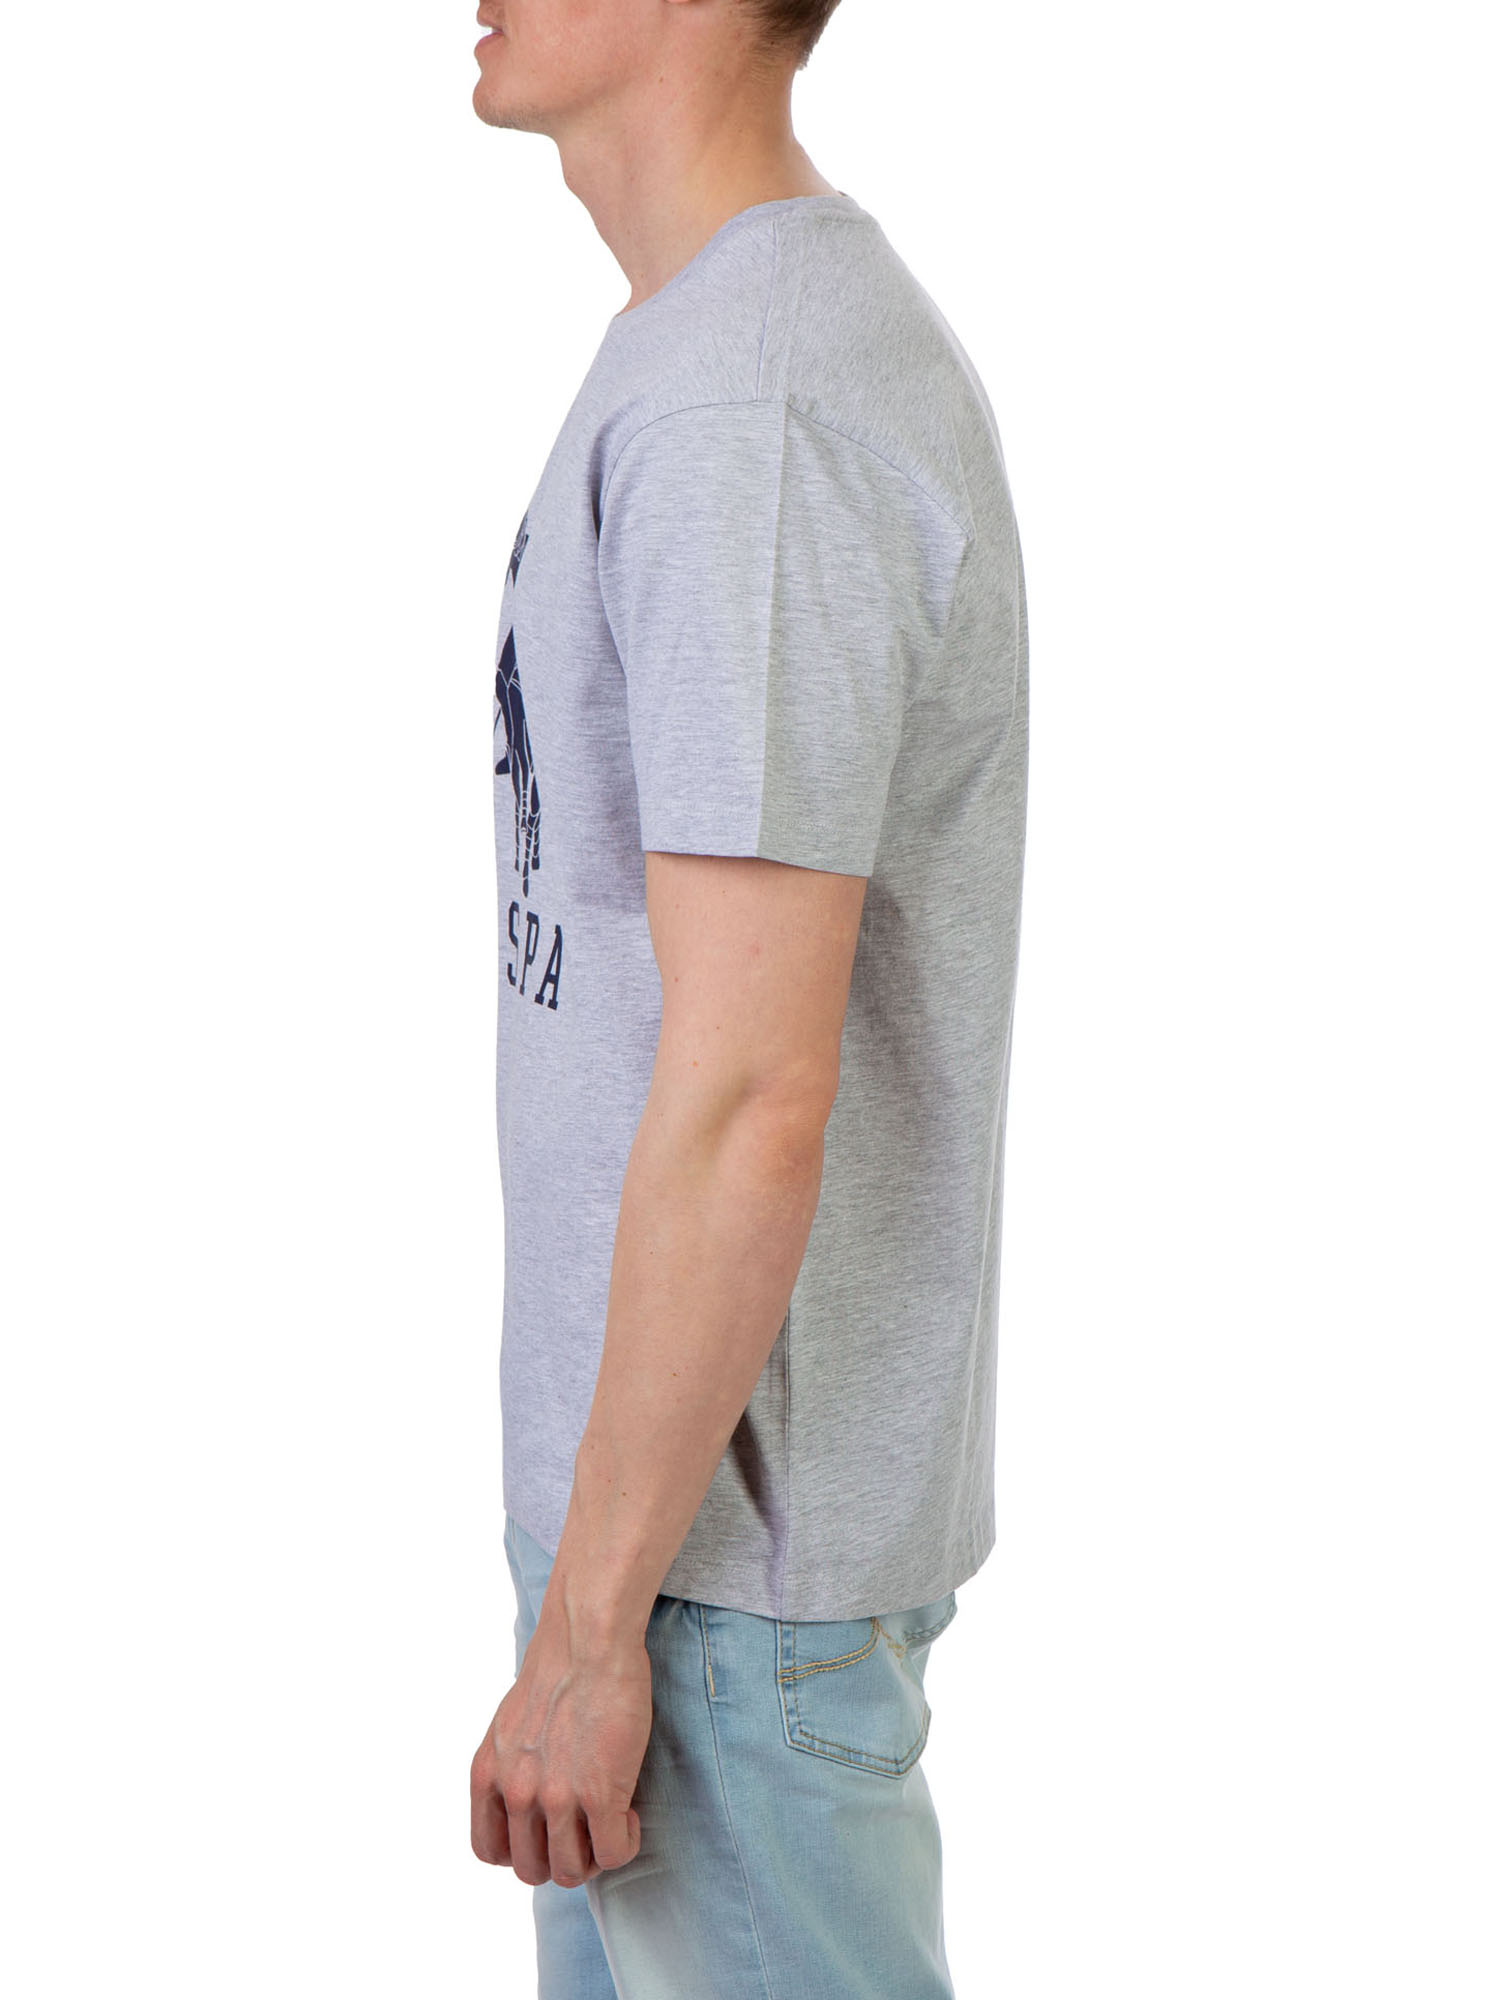 U.S. Polo Assn. Men's Short Sleeve Graphic Jersey T-Shirt - image 3 of 3